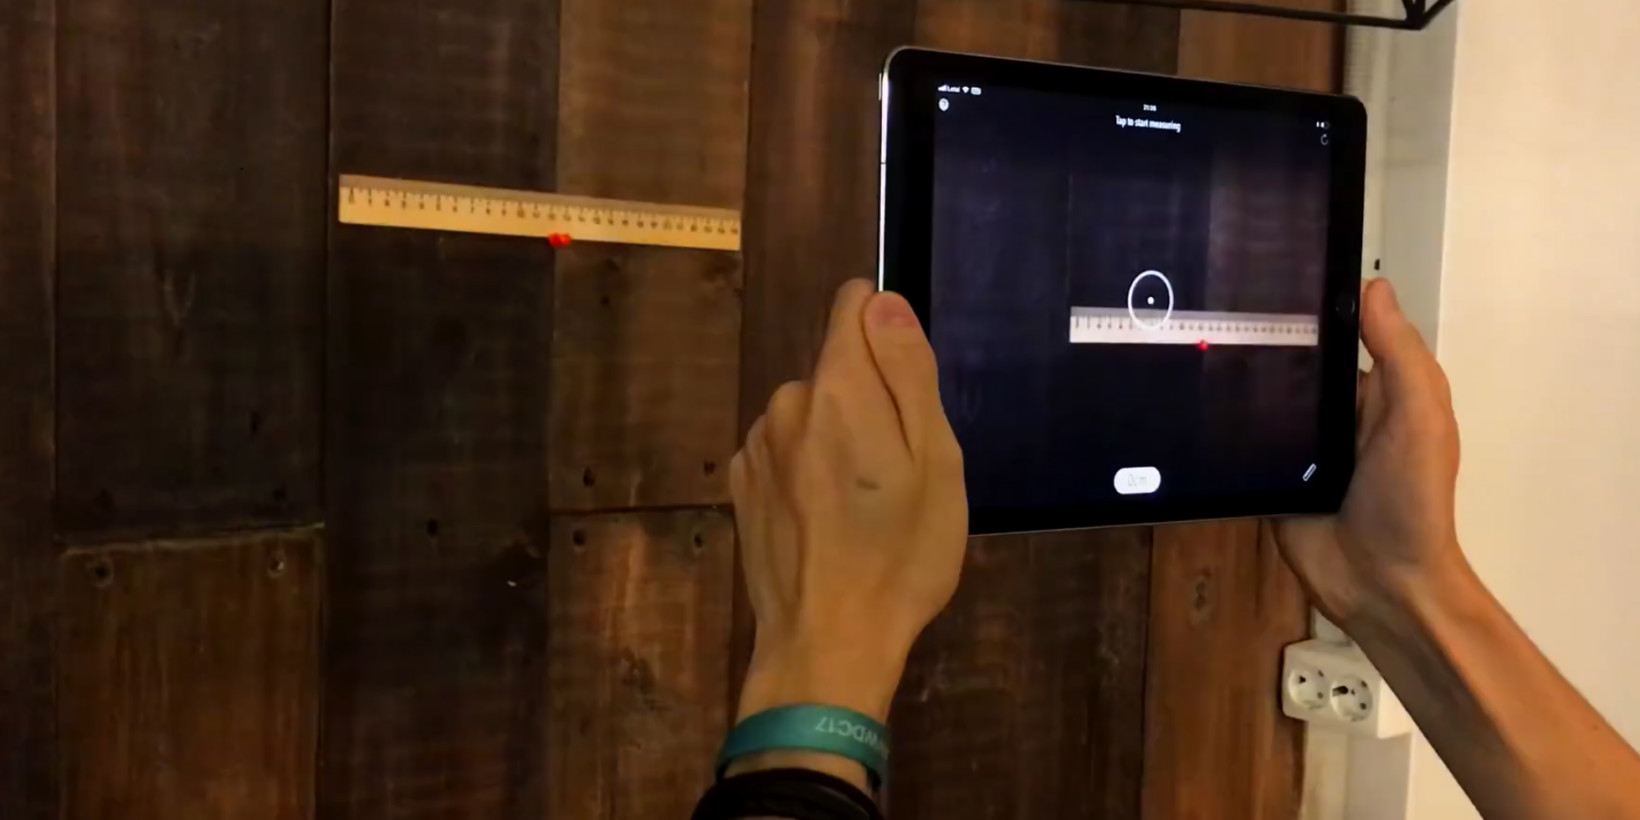 AR Sensor (Android) and MeasureKit (iOS)